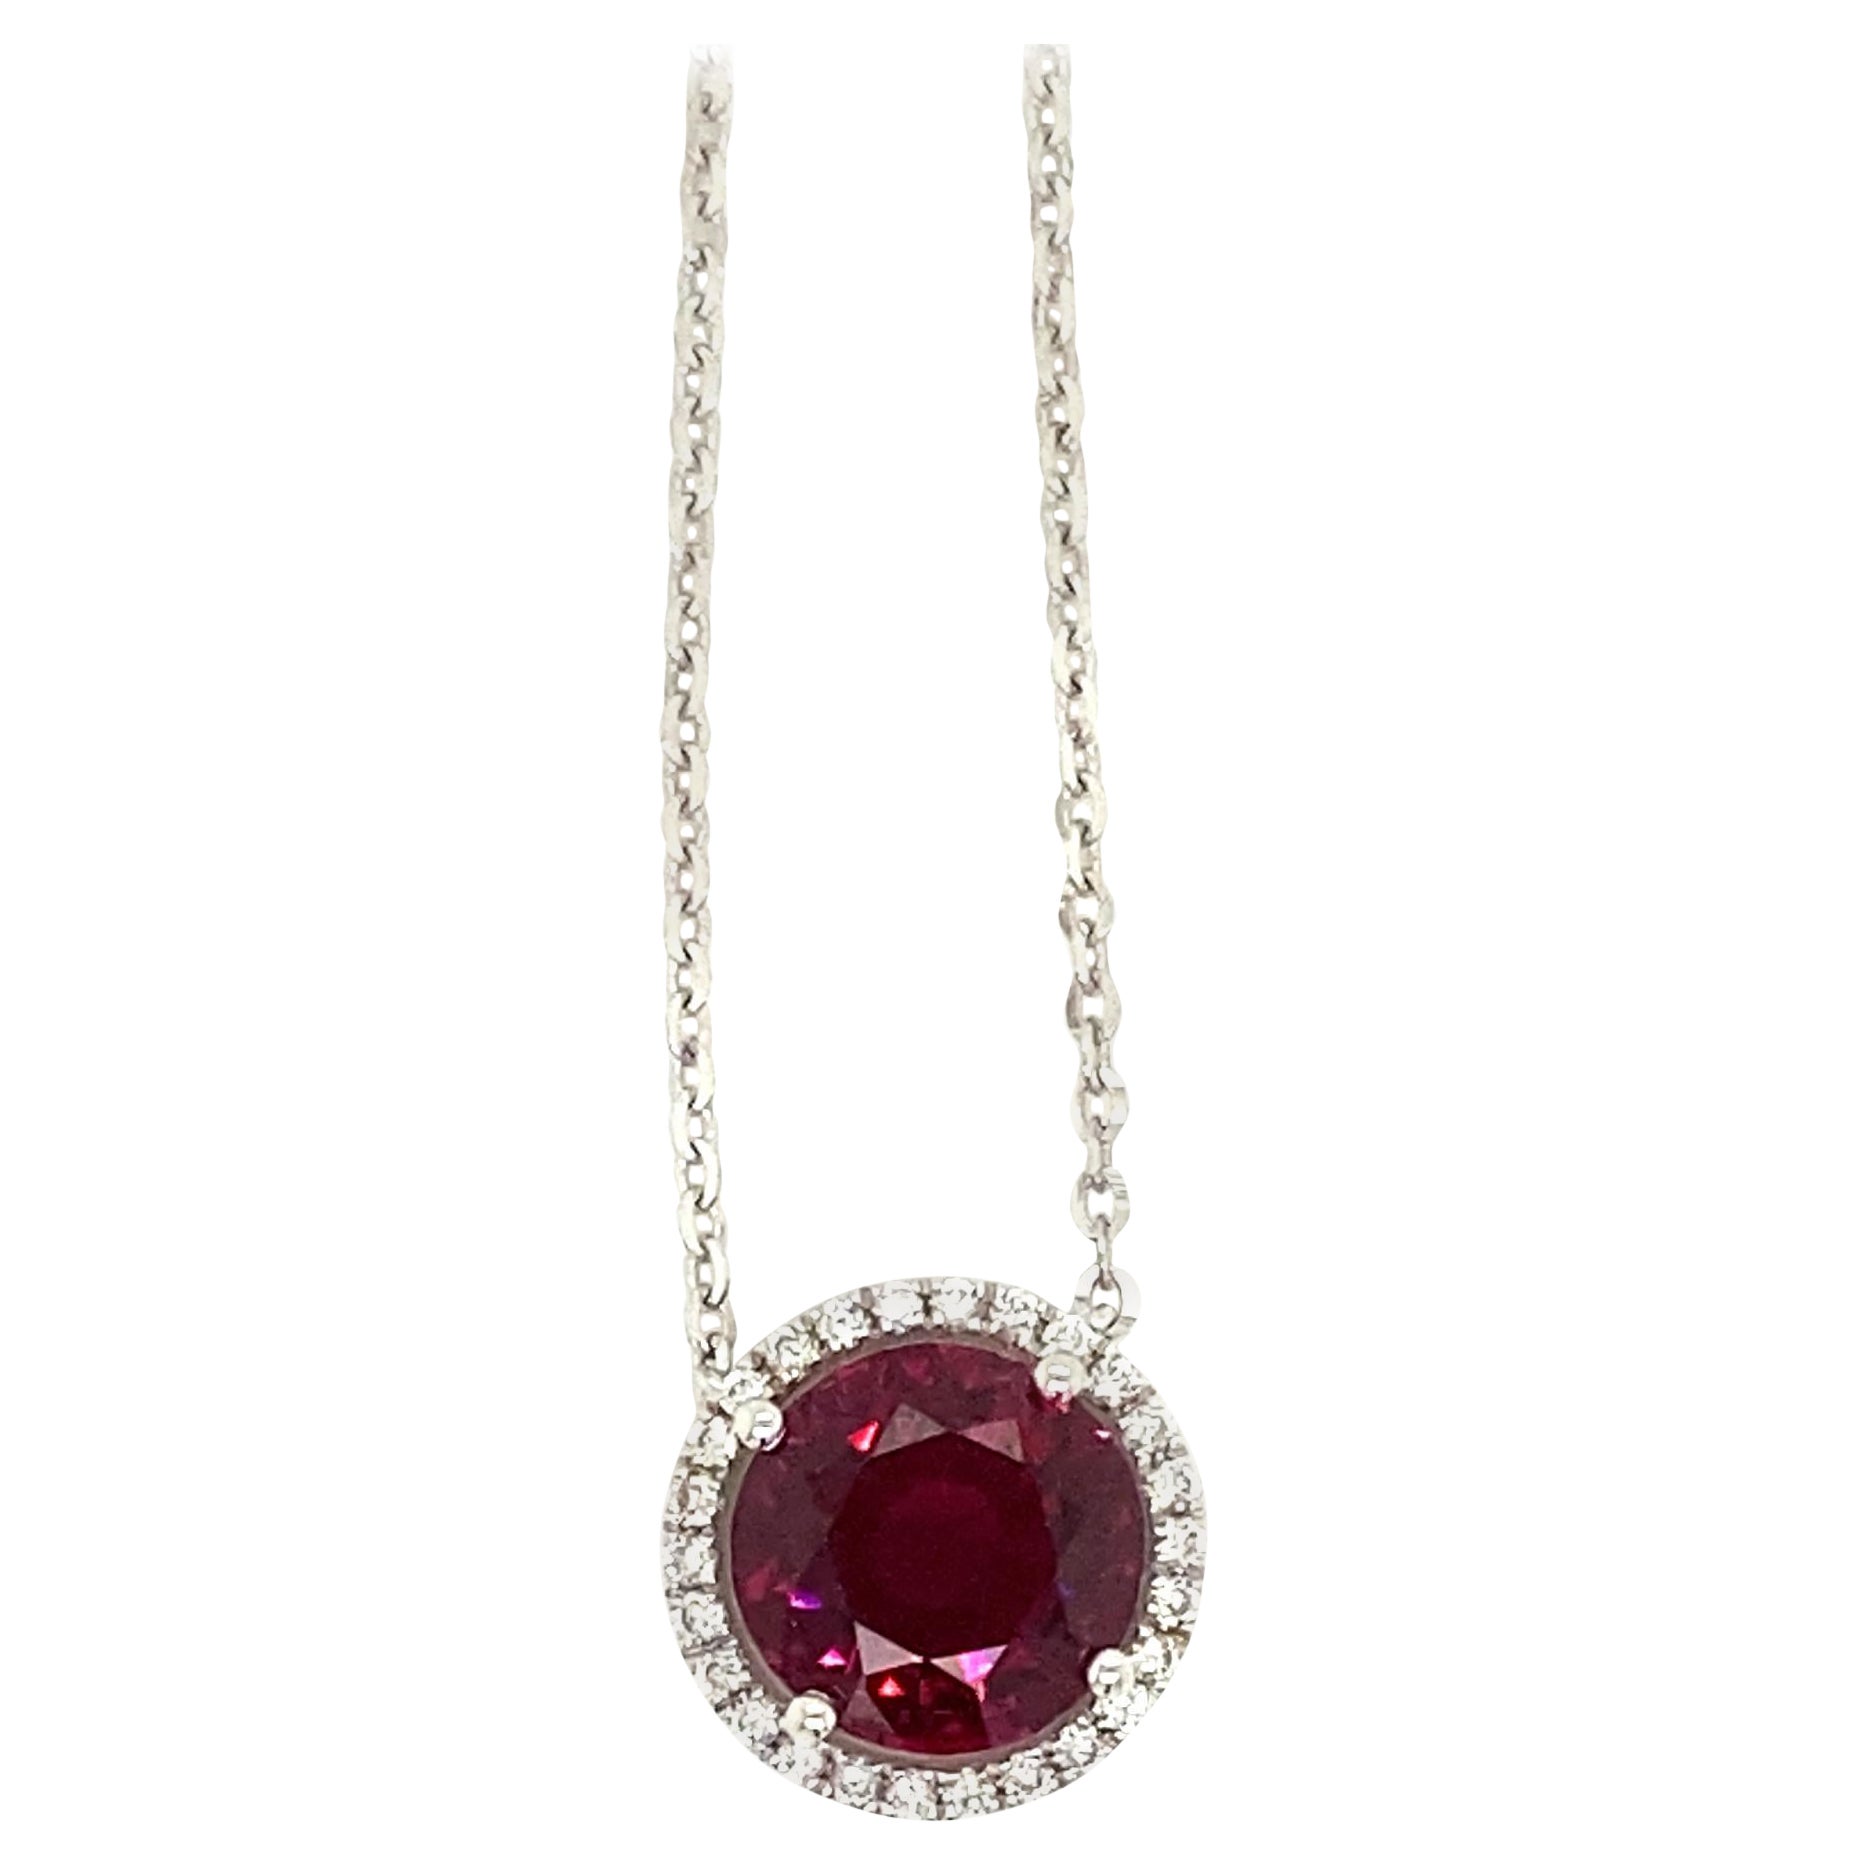 4.14 Carat Round-Cut Vivid Pink-Purple Garnet and White Diamond Pendant Necklace